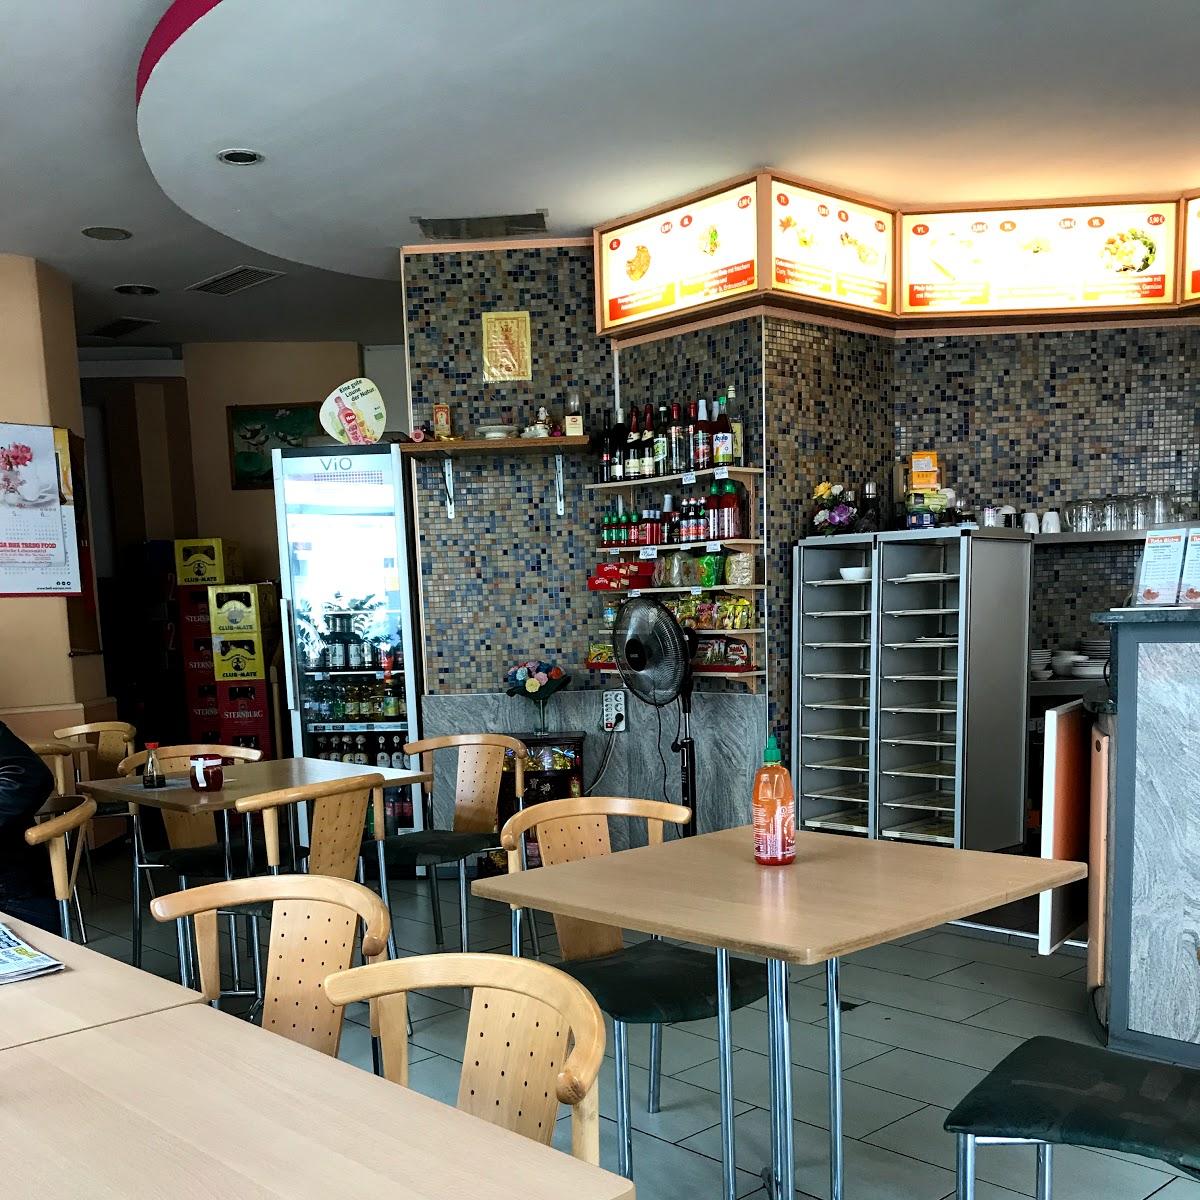 Restaurant "Tuan Bistro" in Leipzig